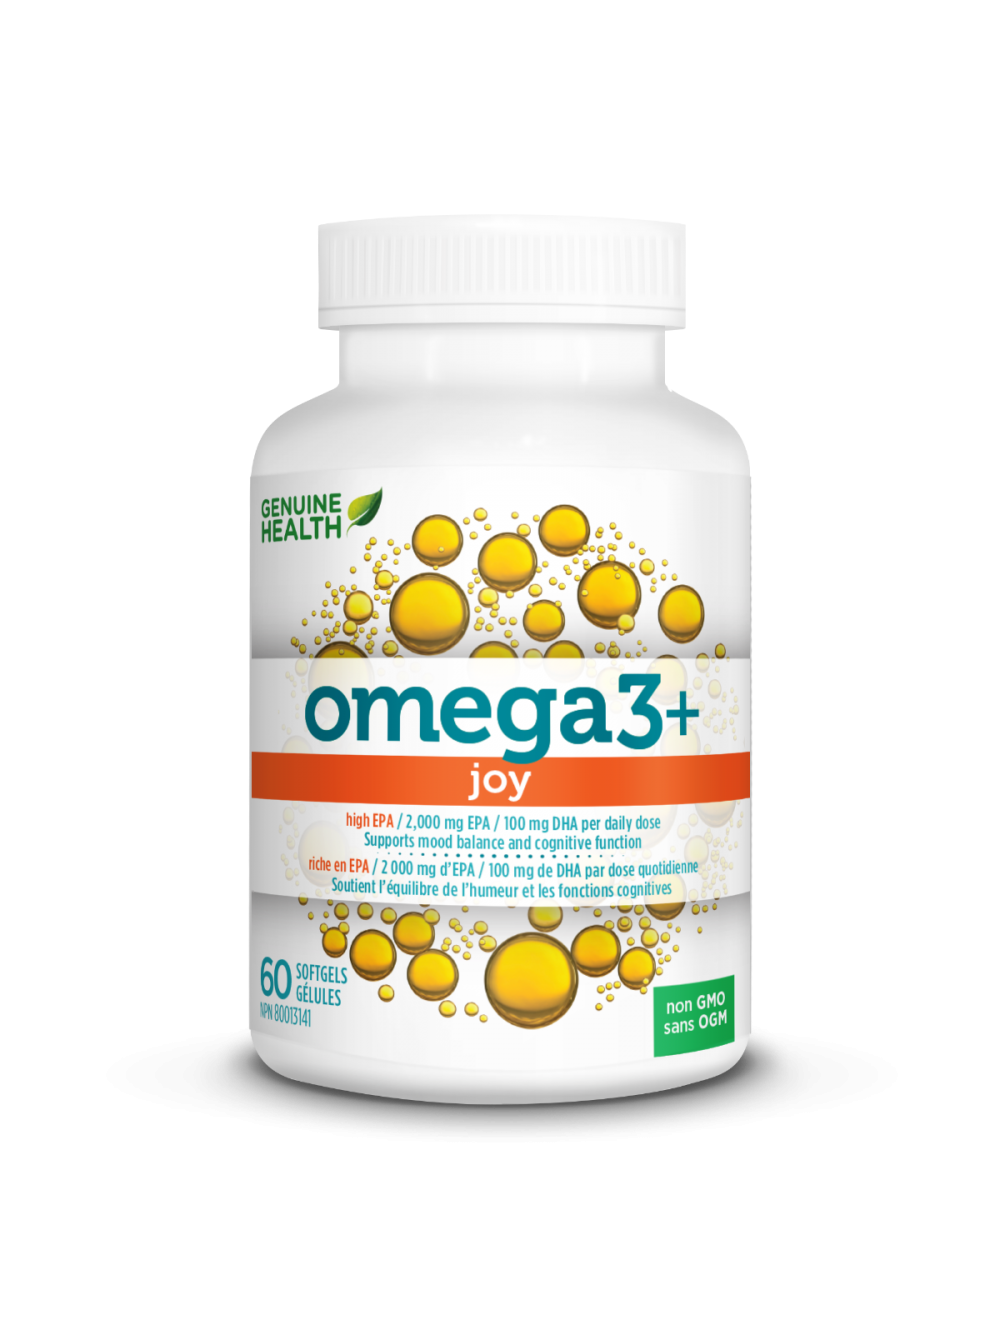 Genuine Health omega3+ JOY - 0